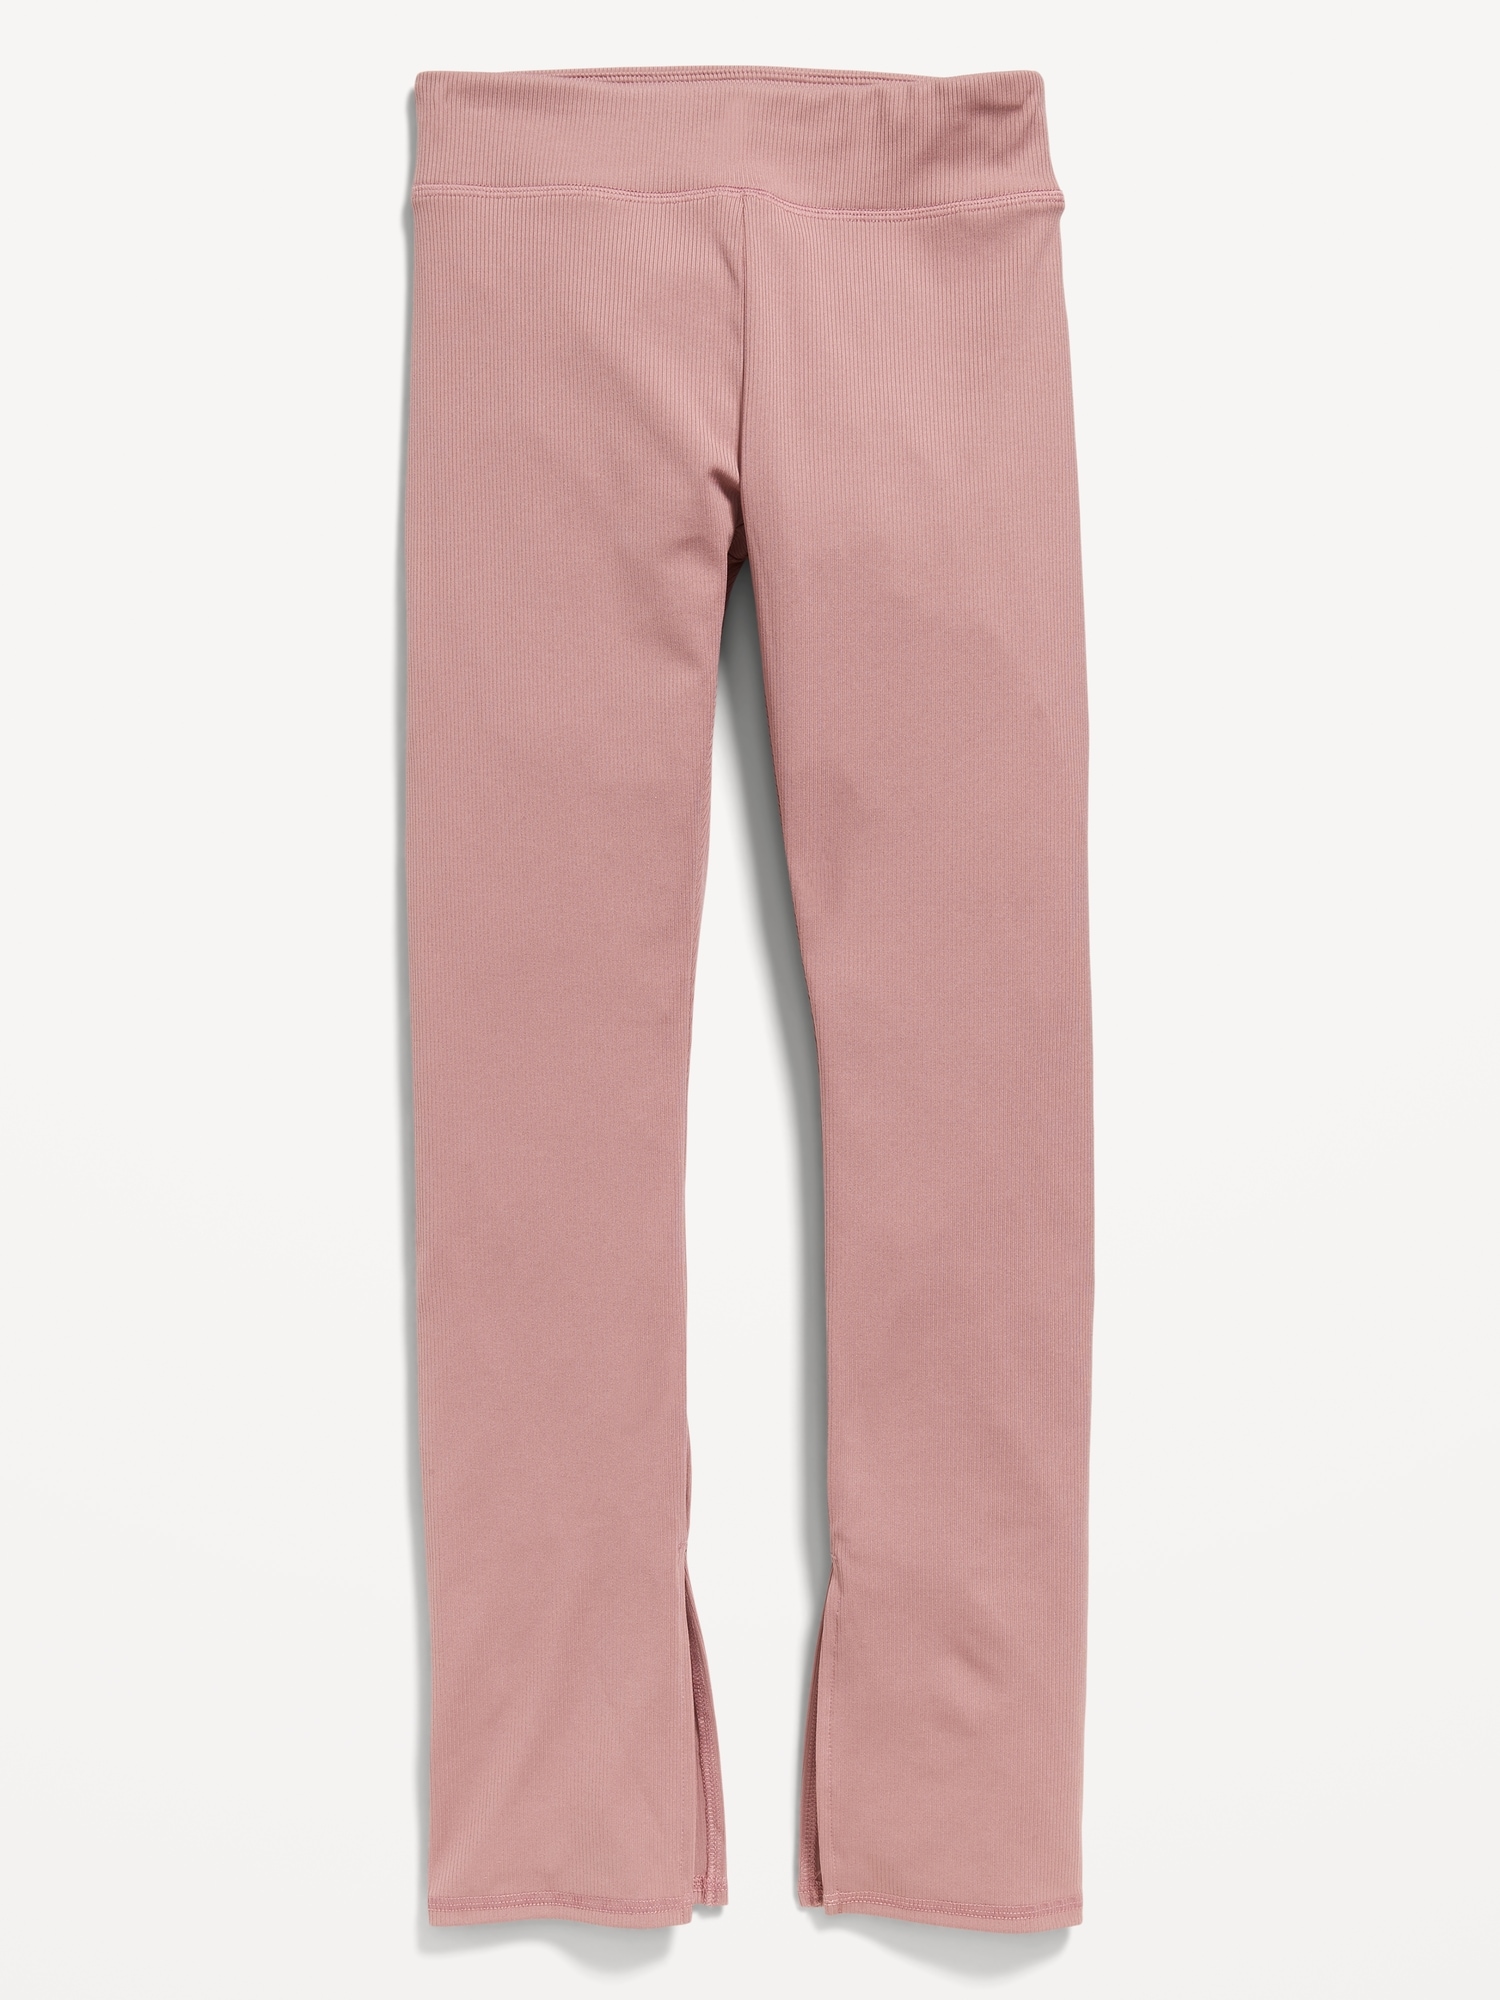 Fusion Lynx High Waist Leggings - Light Pink Melange - Clothing